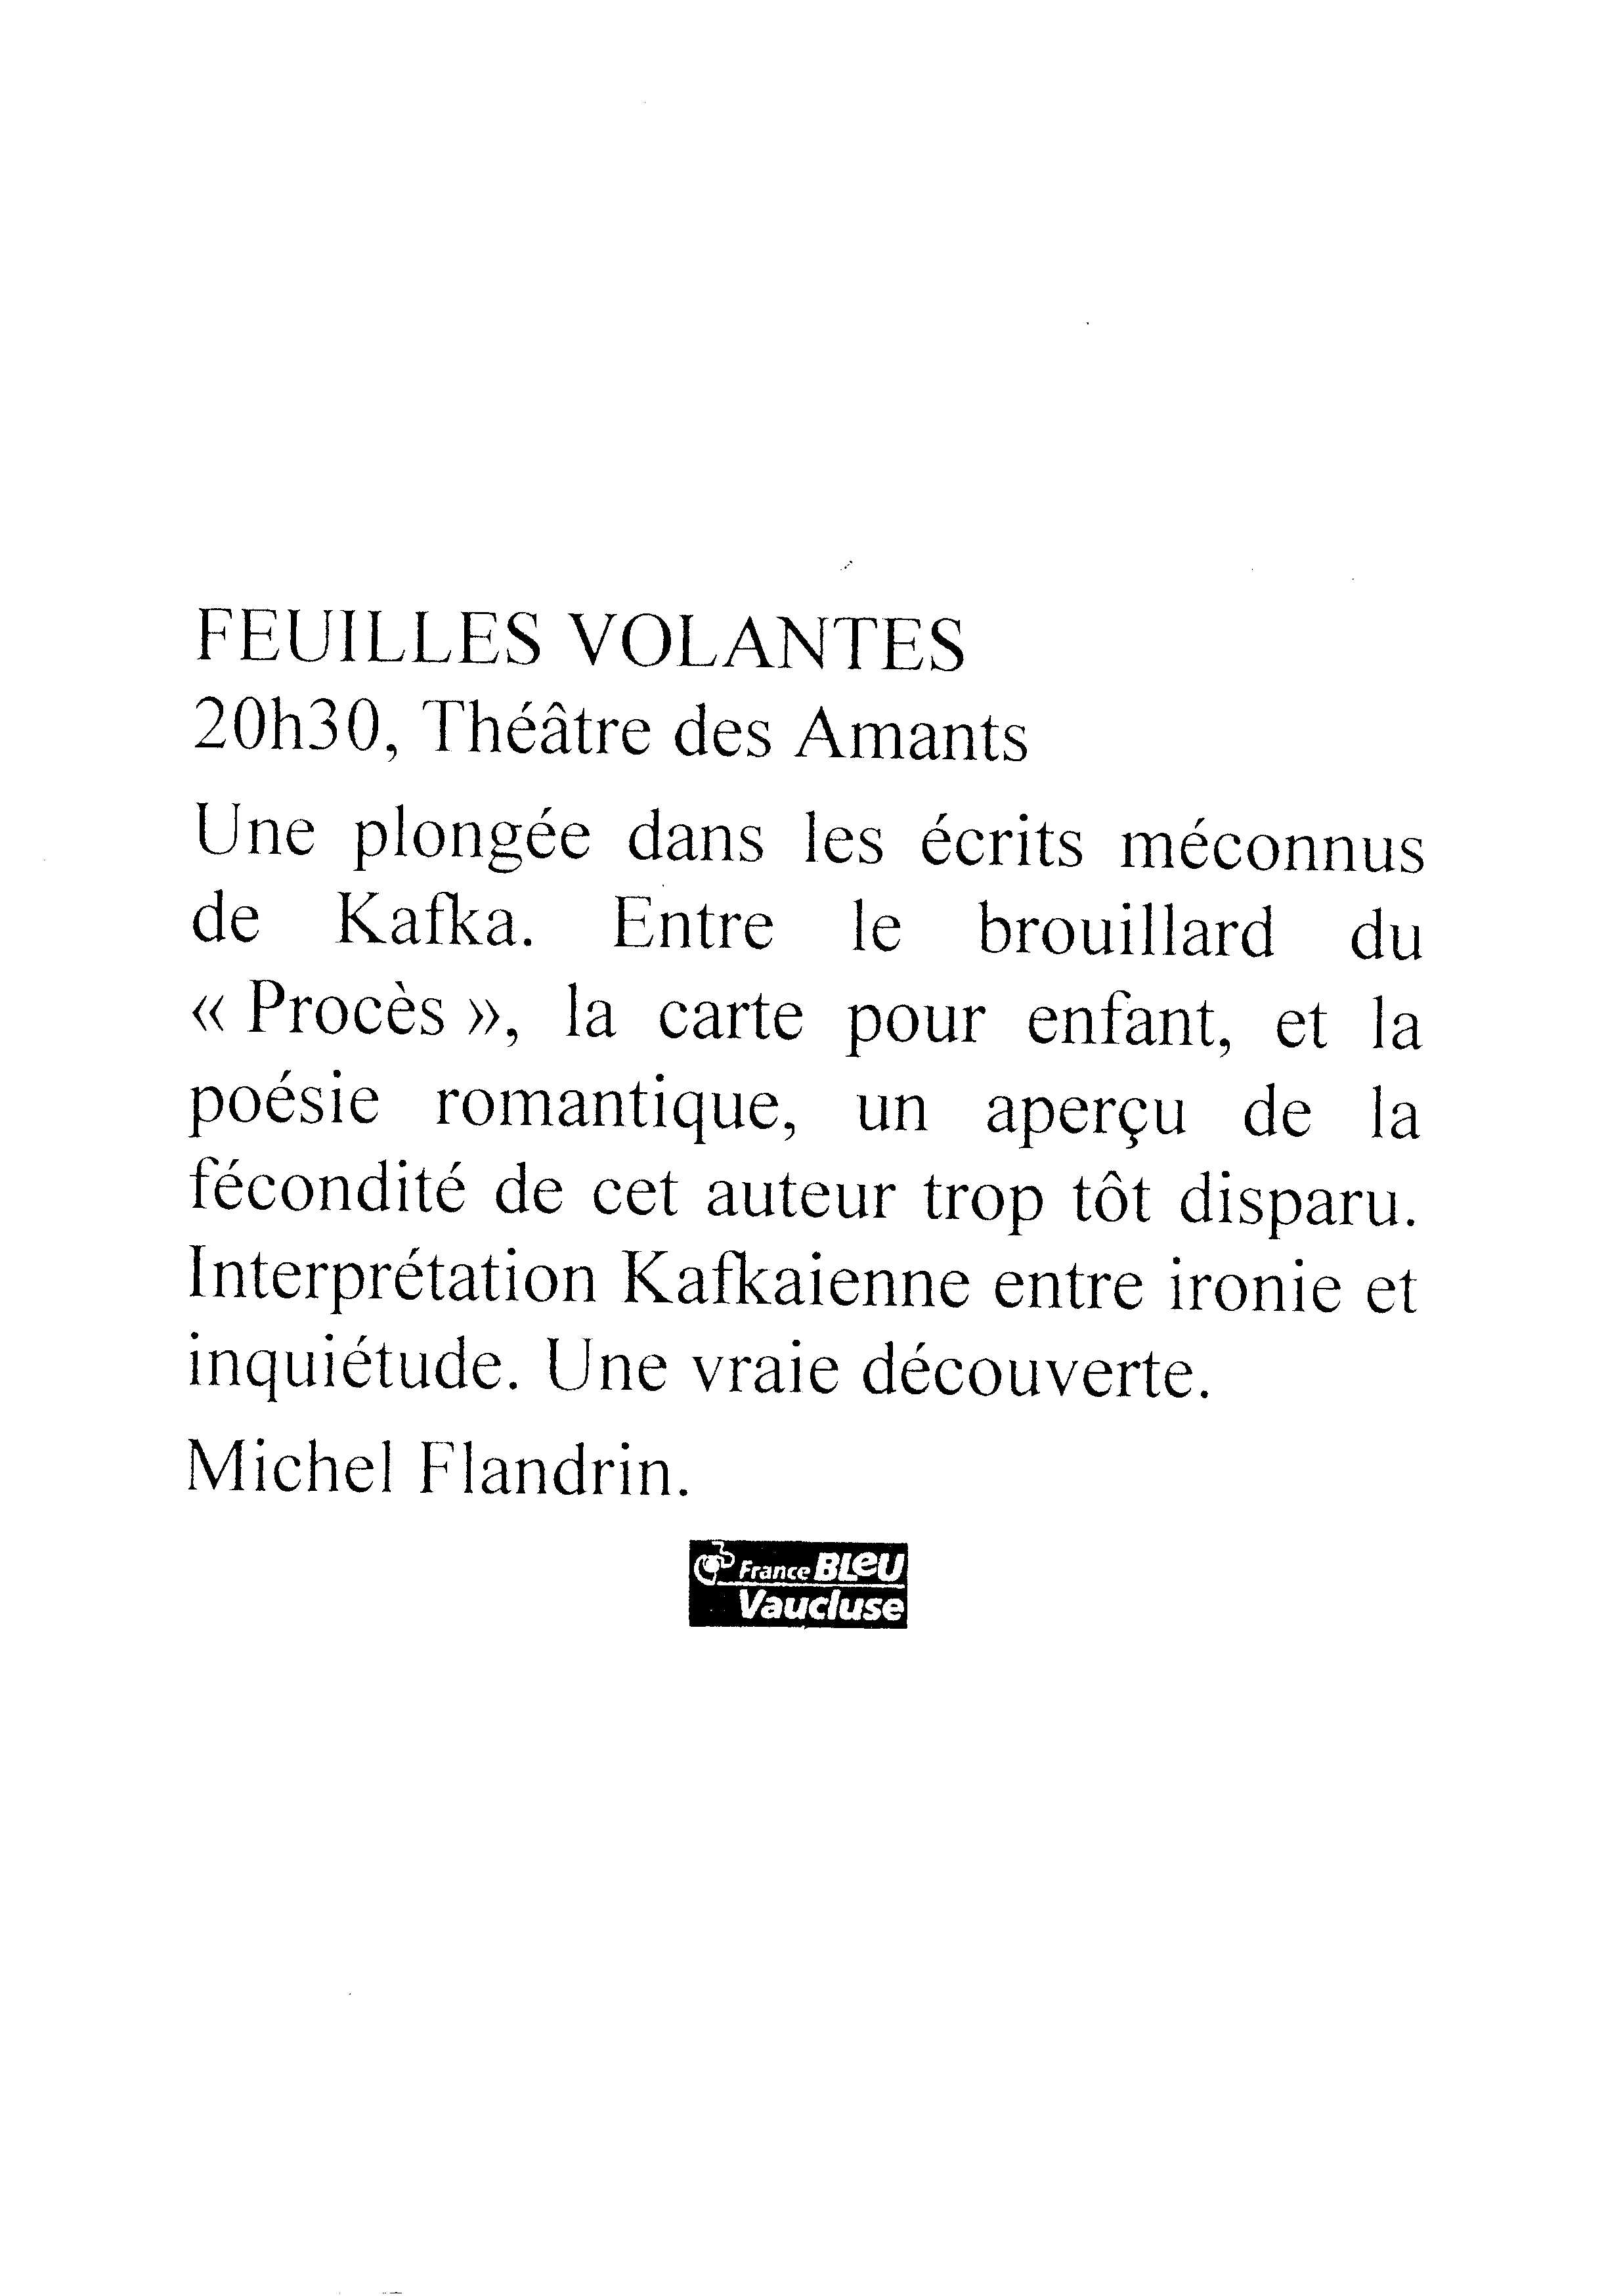 Feuilles volantes - Kafka - France Bleu Vaucluse - juillet 2002